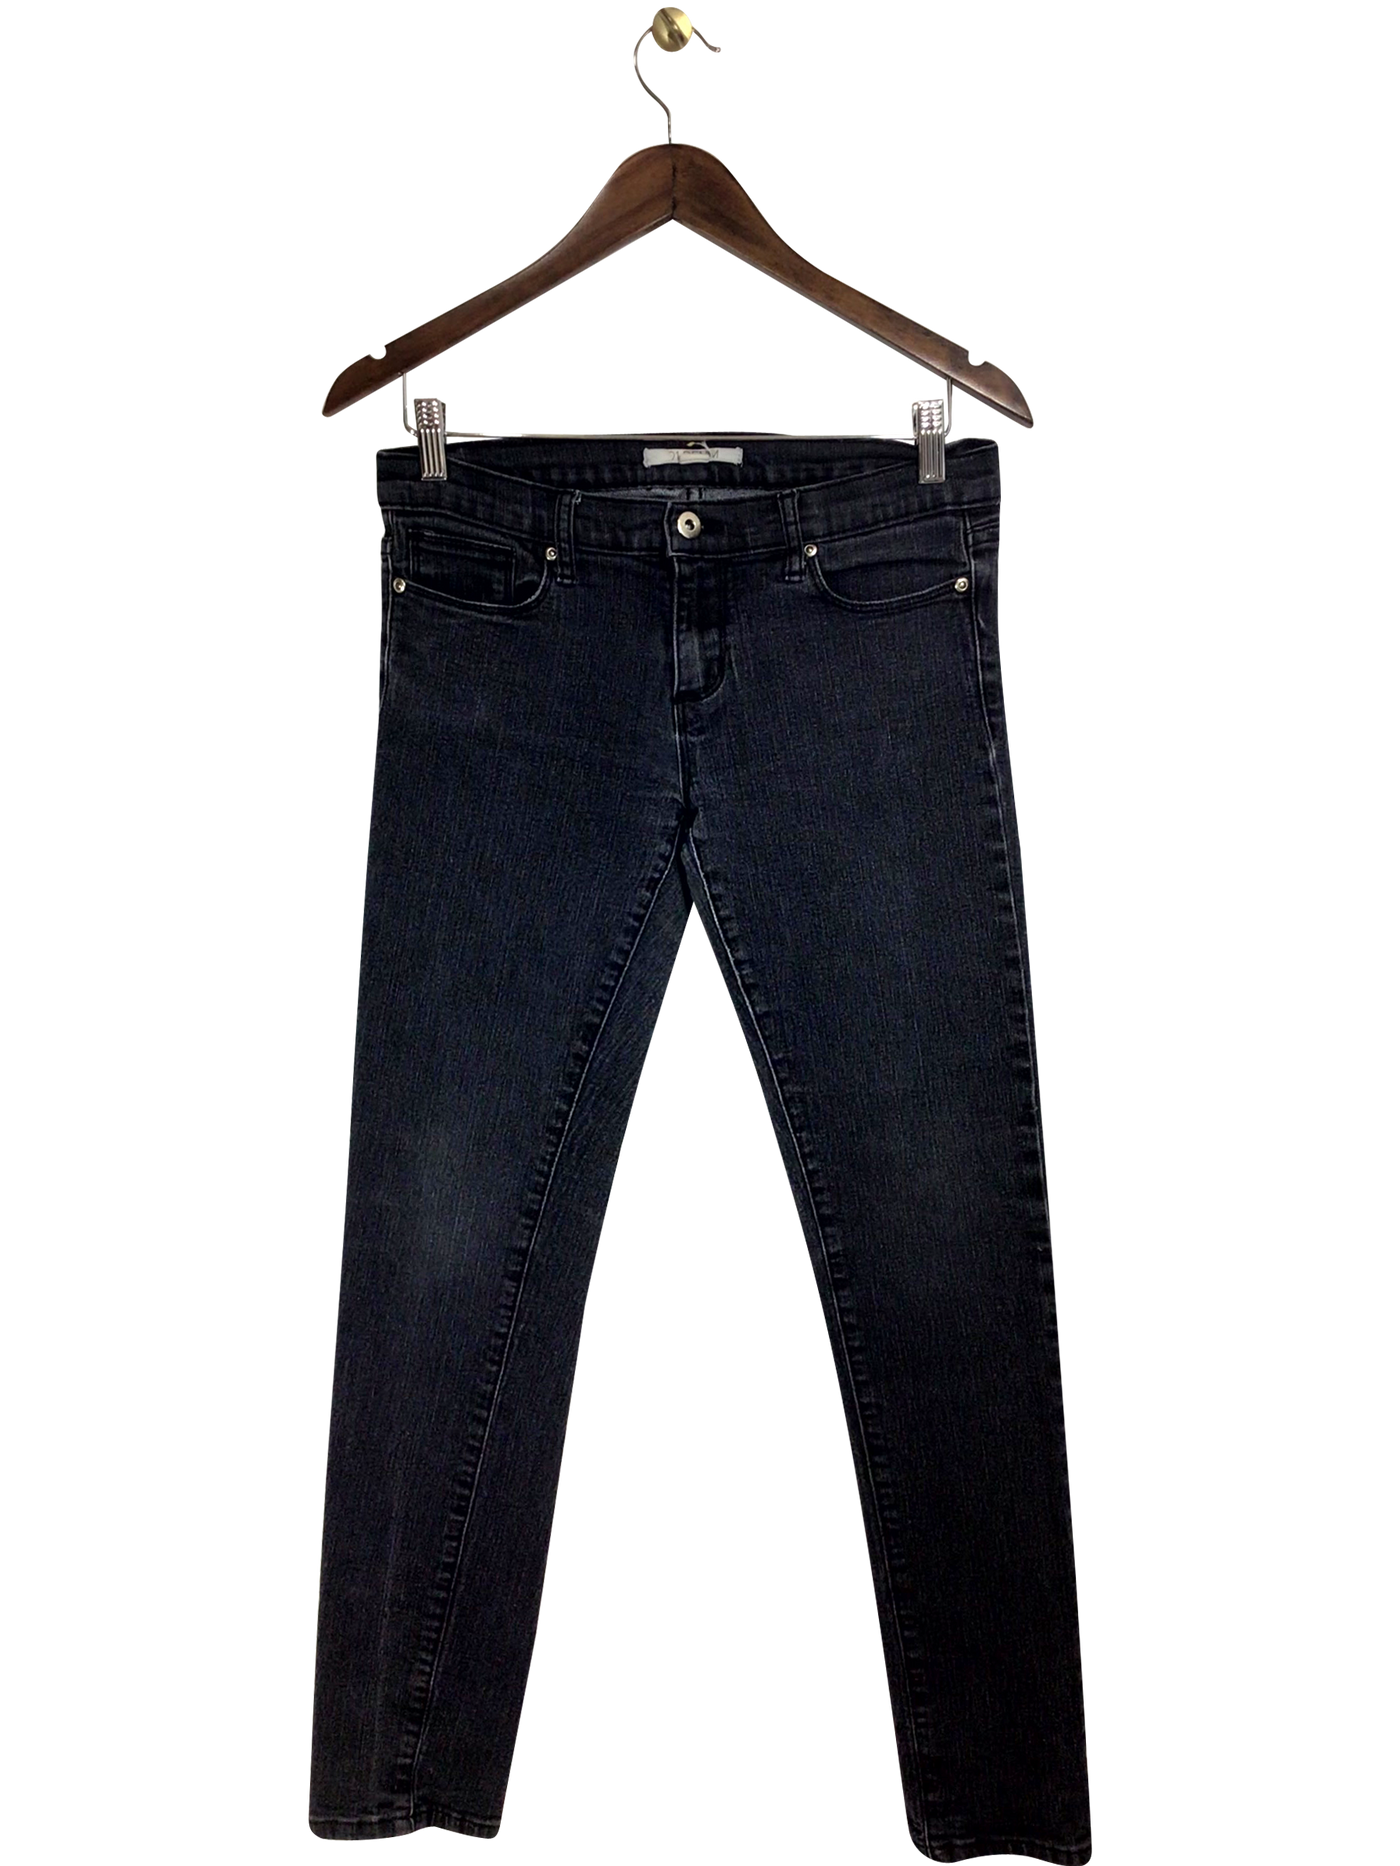 21 DENIM Straight-legged Jeans Regular fit in Blue - Size 29x32 | 13.25 $ KOOP